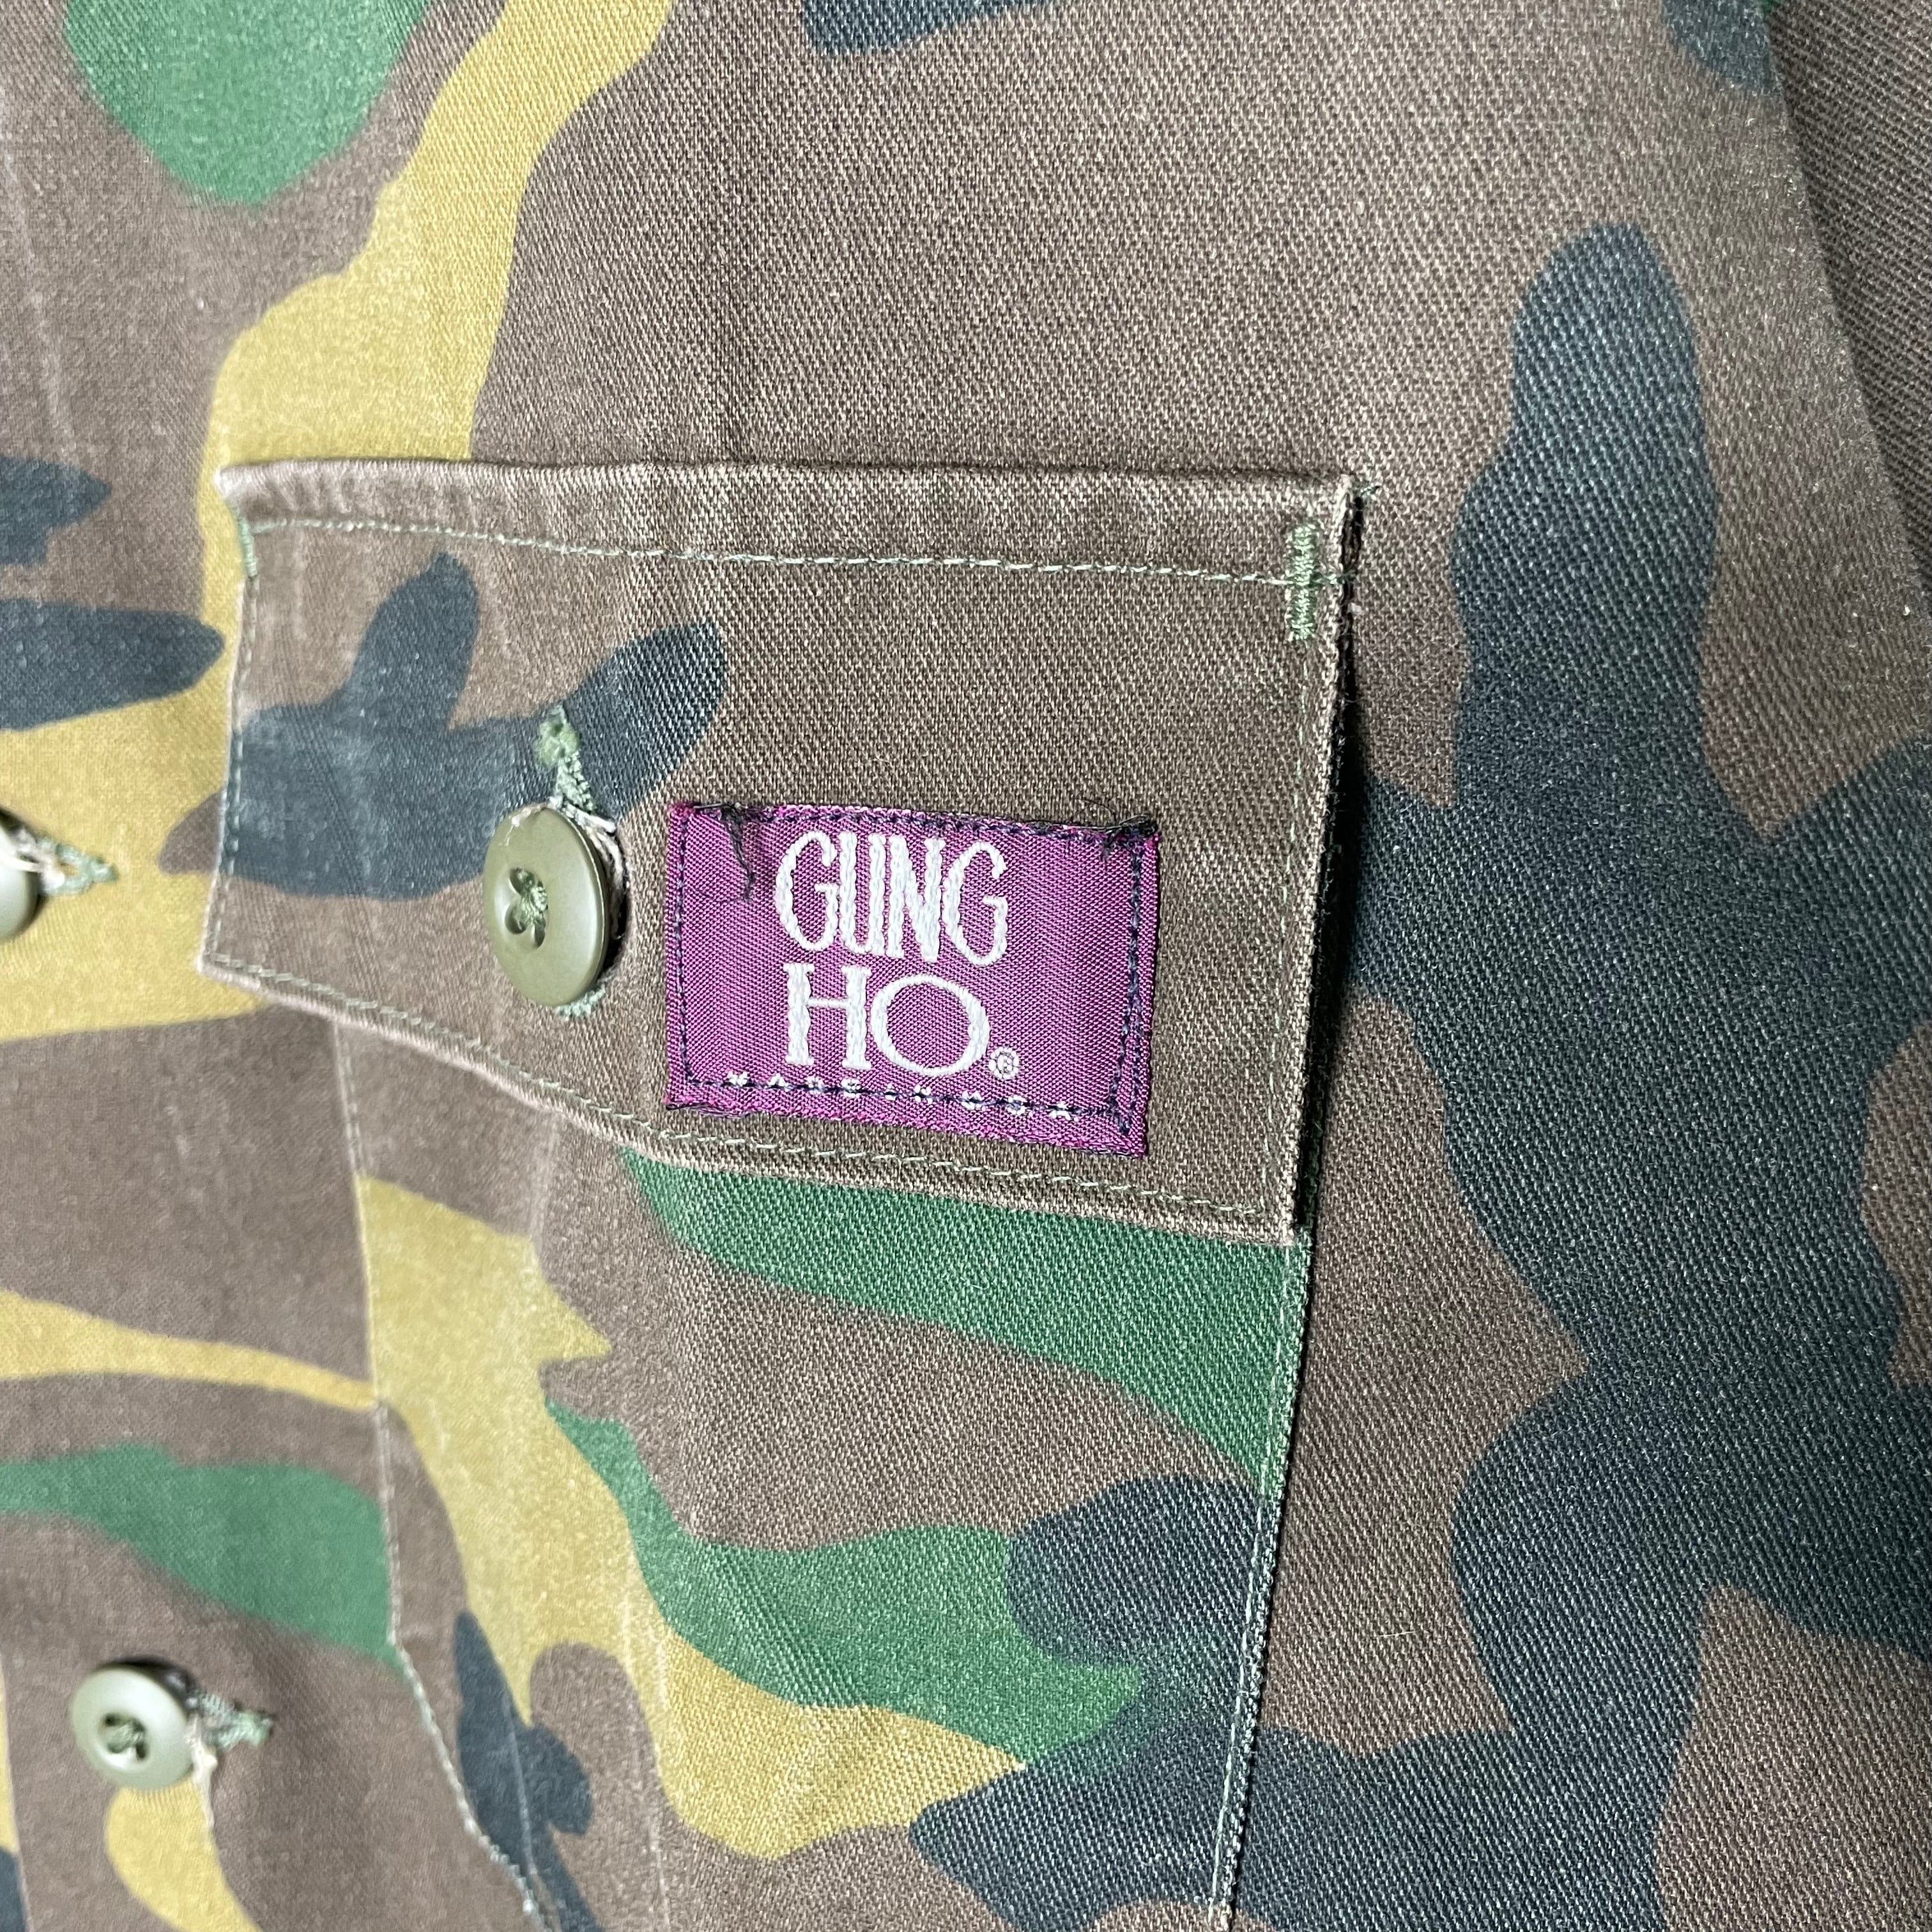 GANGHO カバーオール L カモフラージュ 迷彩柄 胸ポケット Made in USA